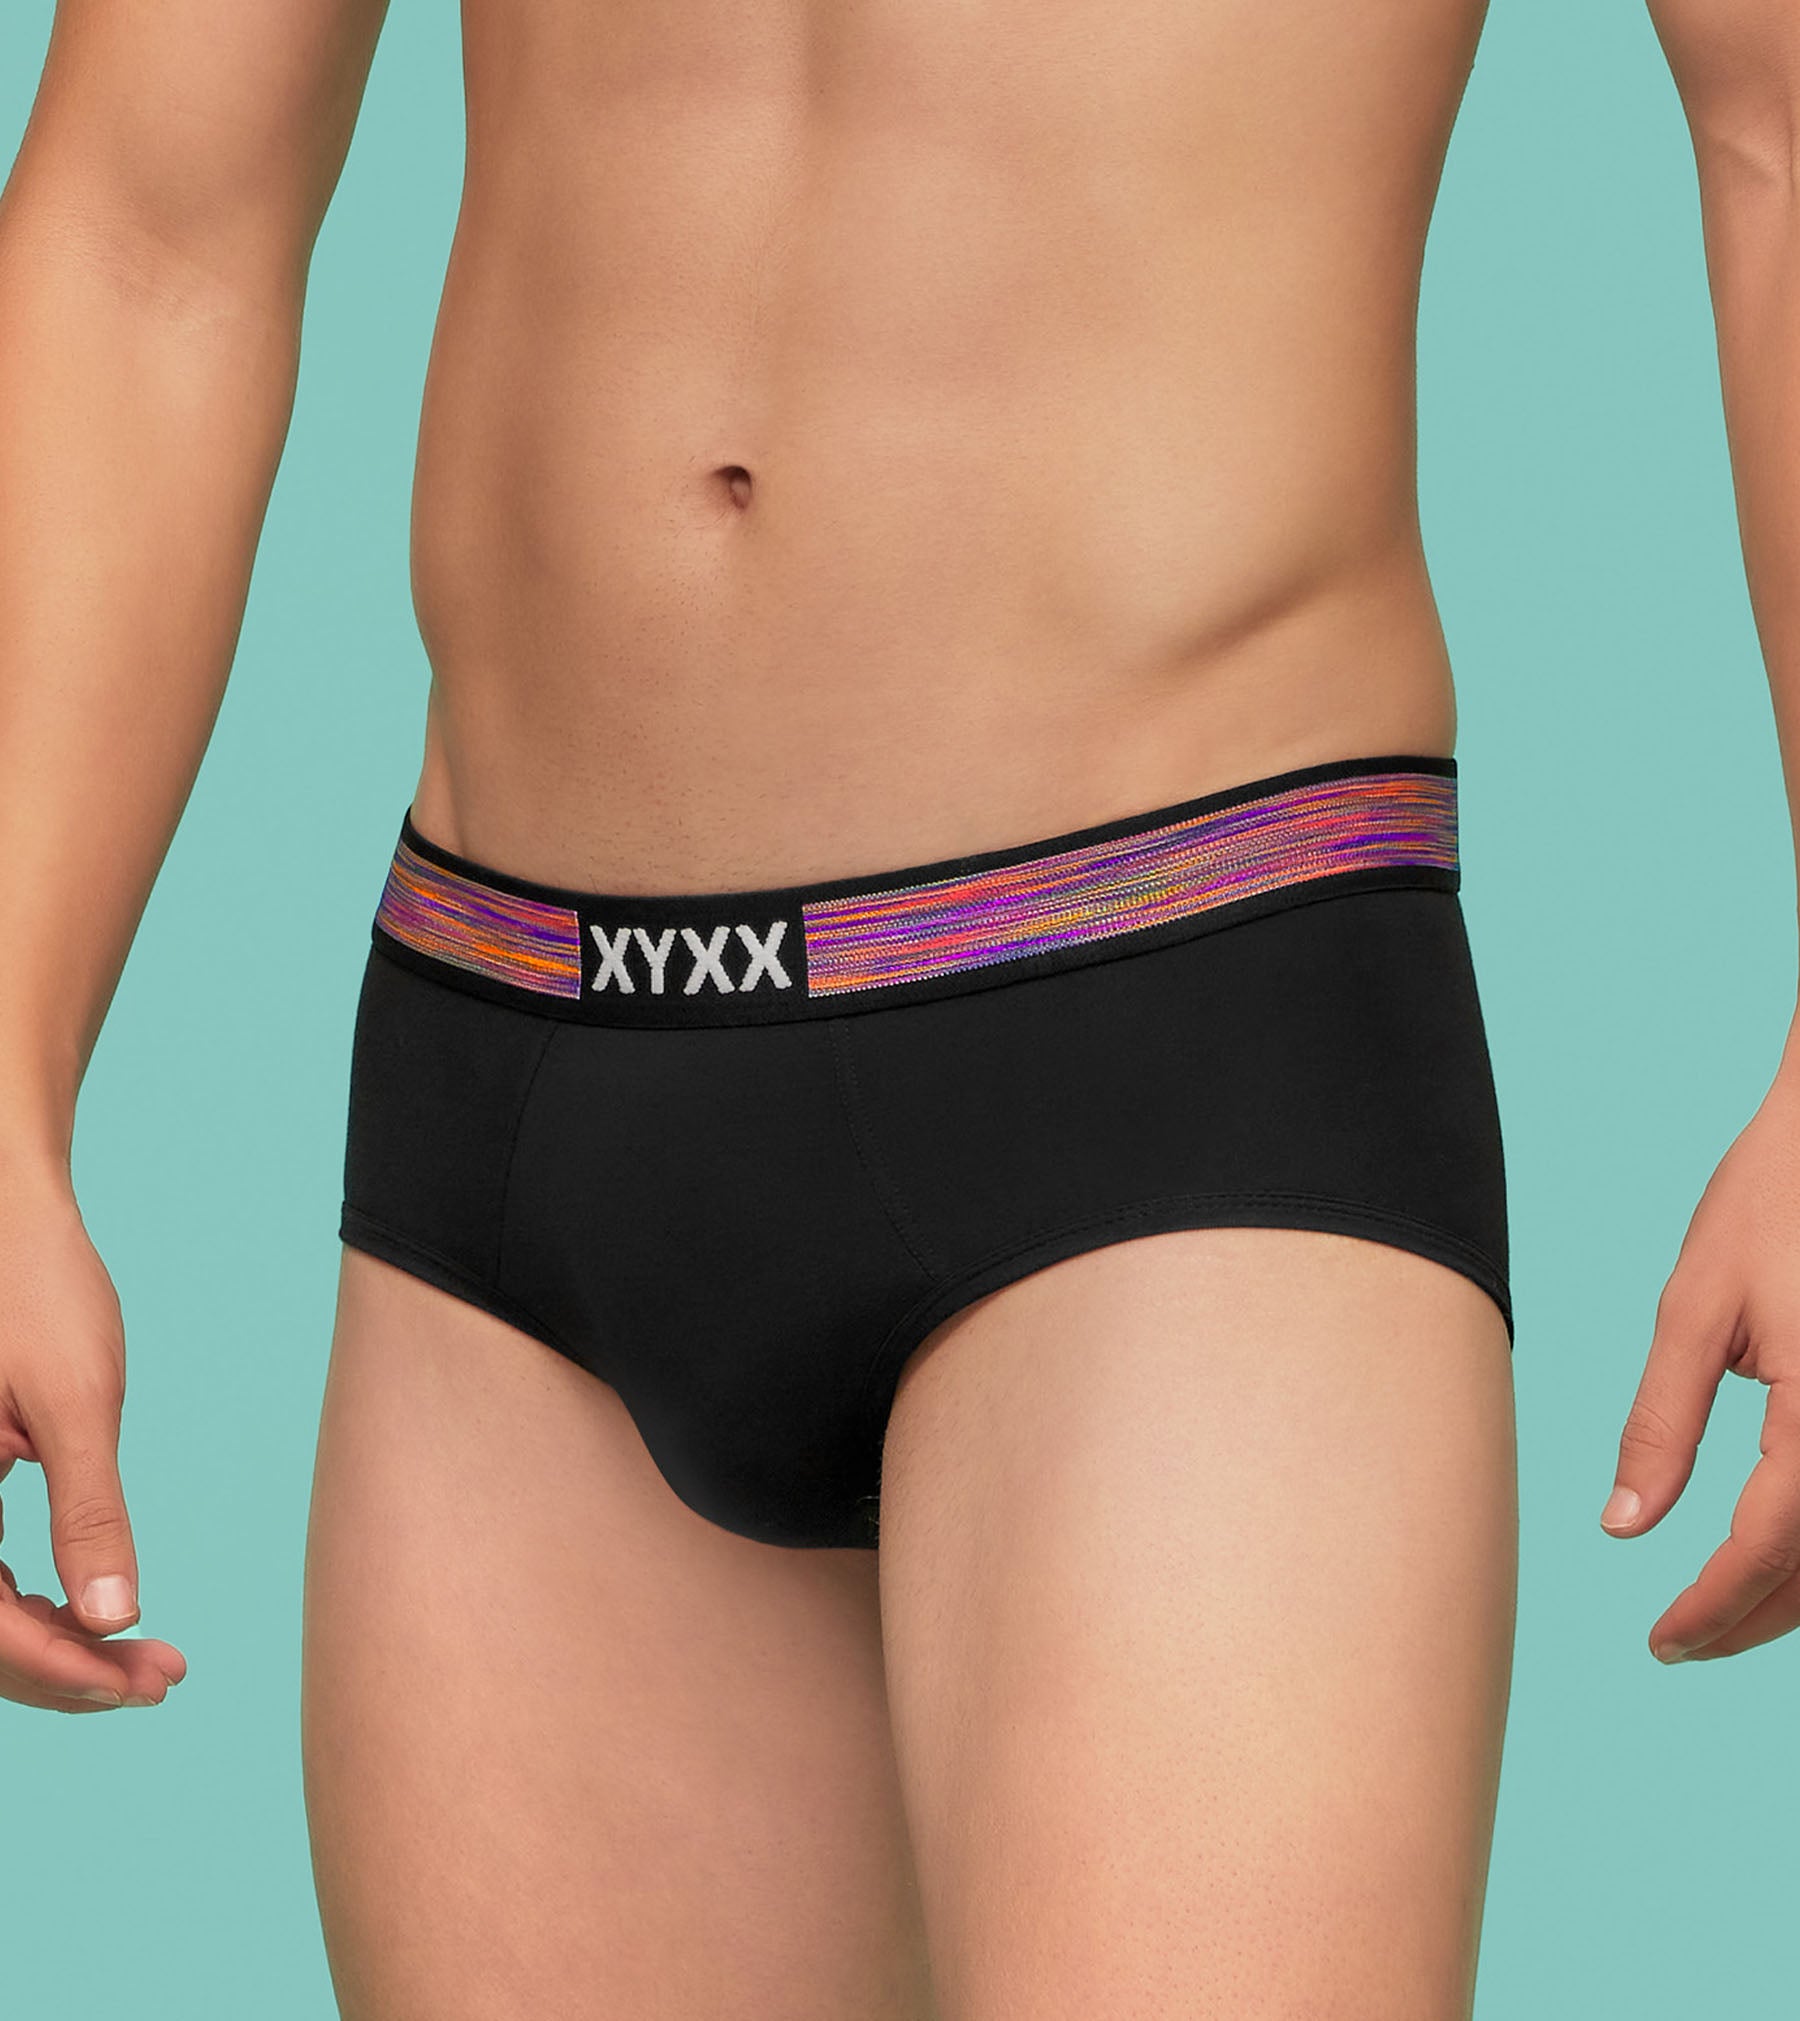 Tencel Modal Briefs For Men Pack of 3 (Lime Punch, Black, Sandy Beige) -  XYXX Mens Apparels